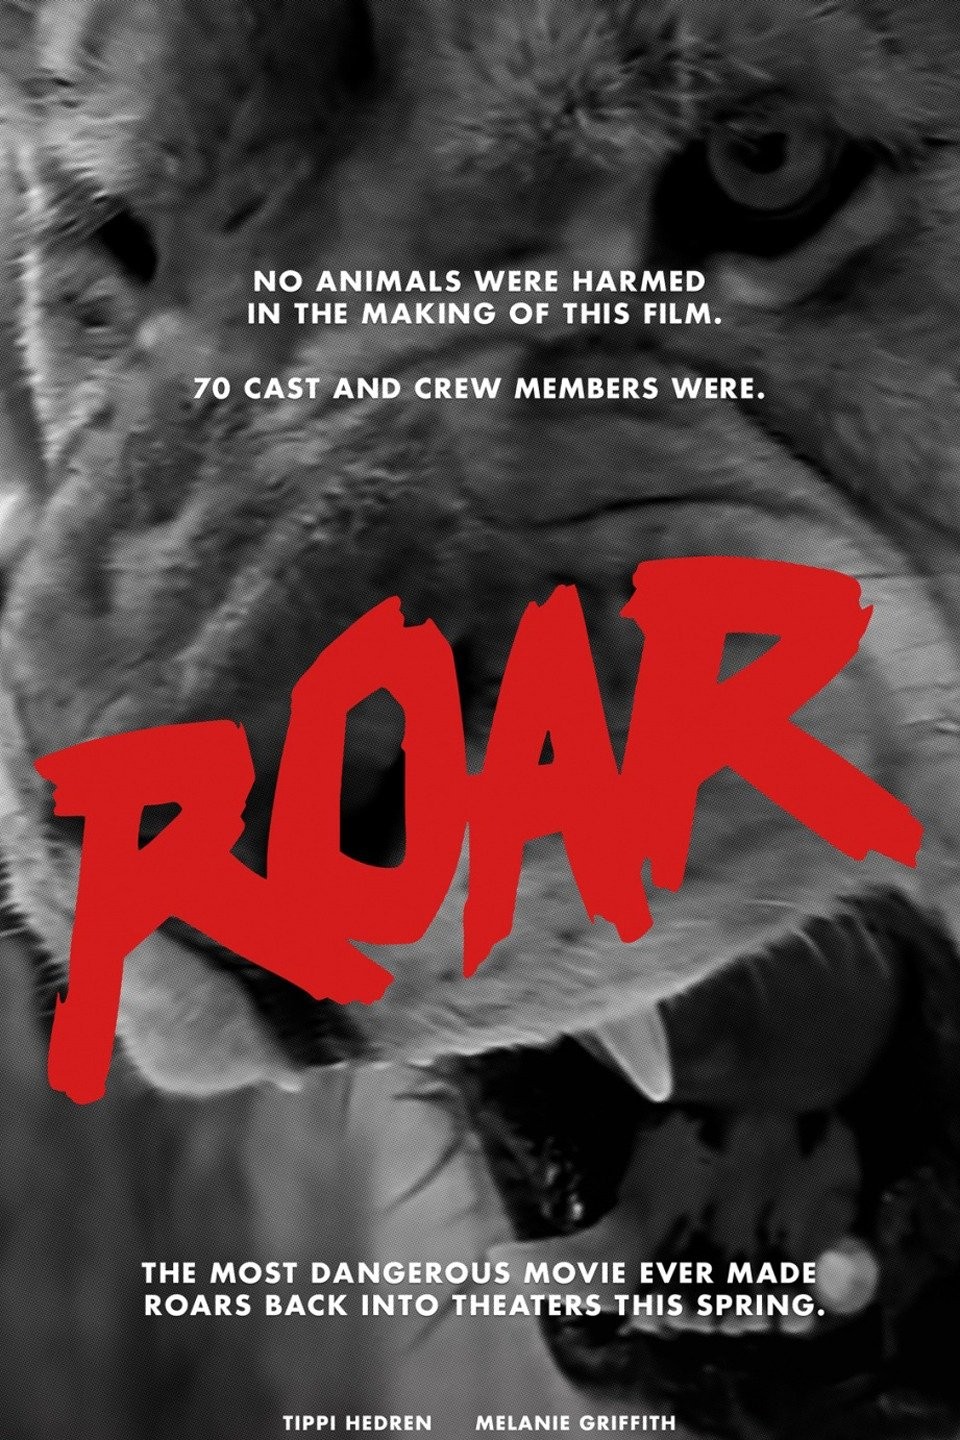 Movie Review: Boruto: Naruto the Movie – The Roar